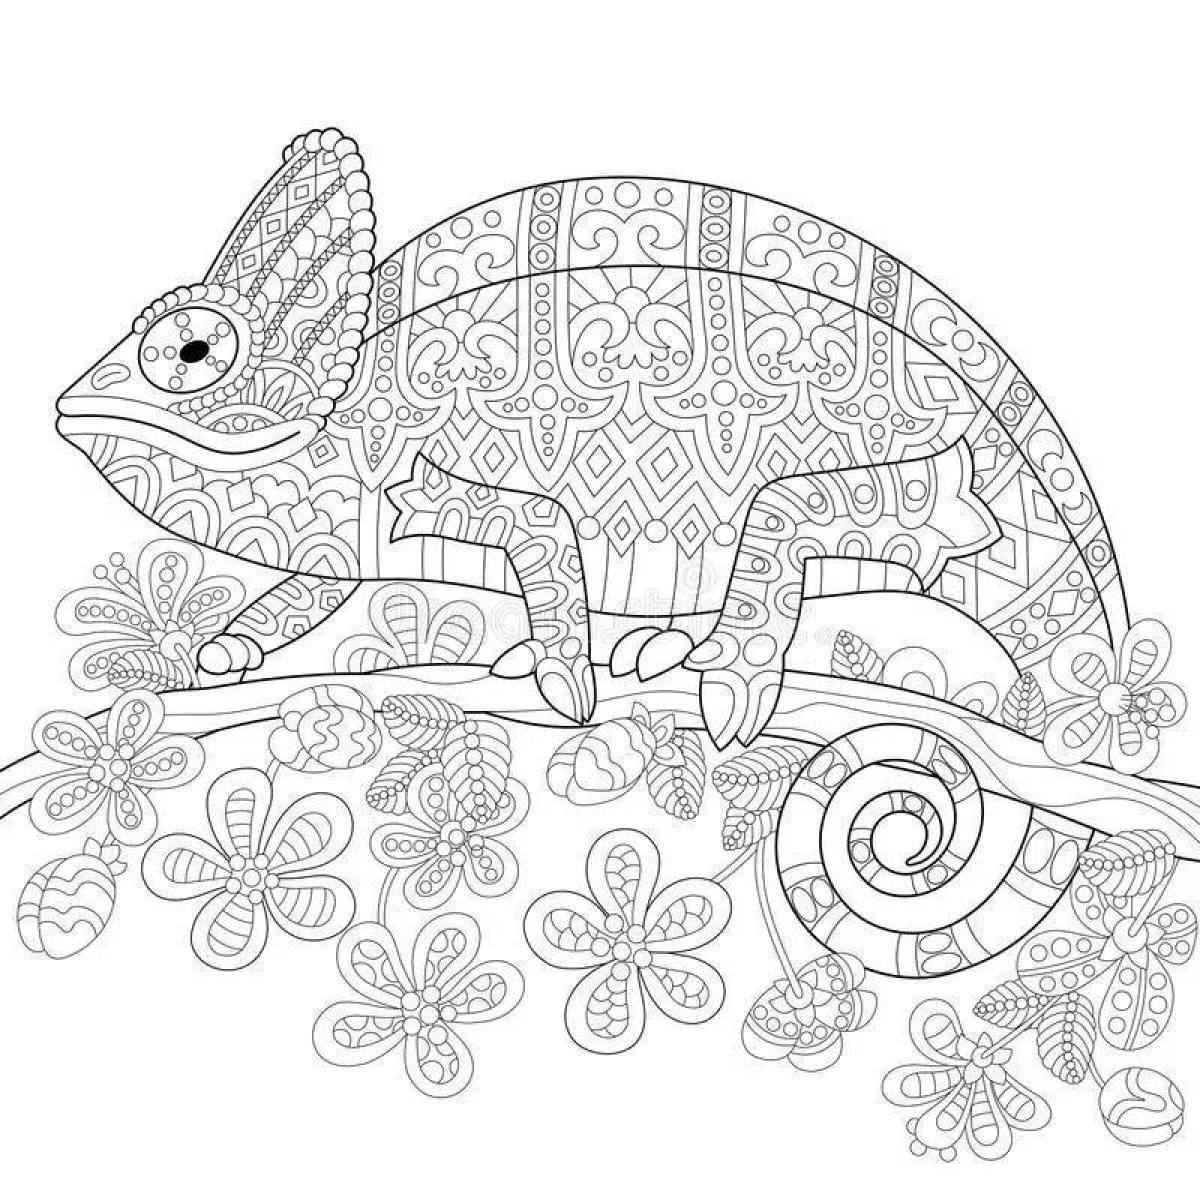 Joyful coloring antistress chameleon